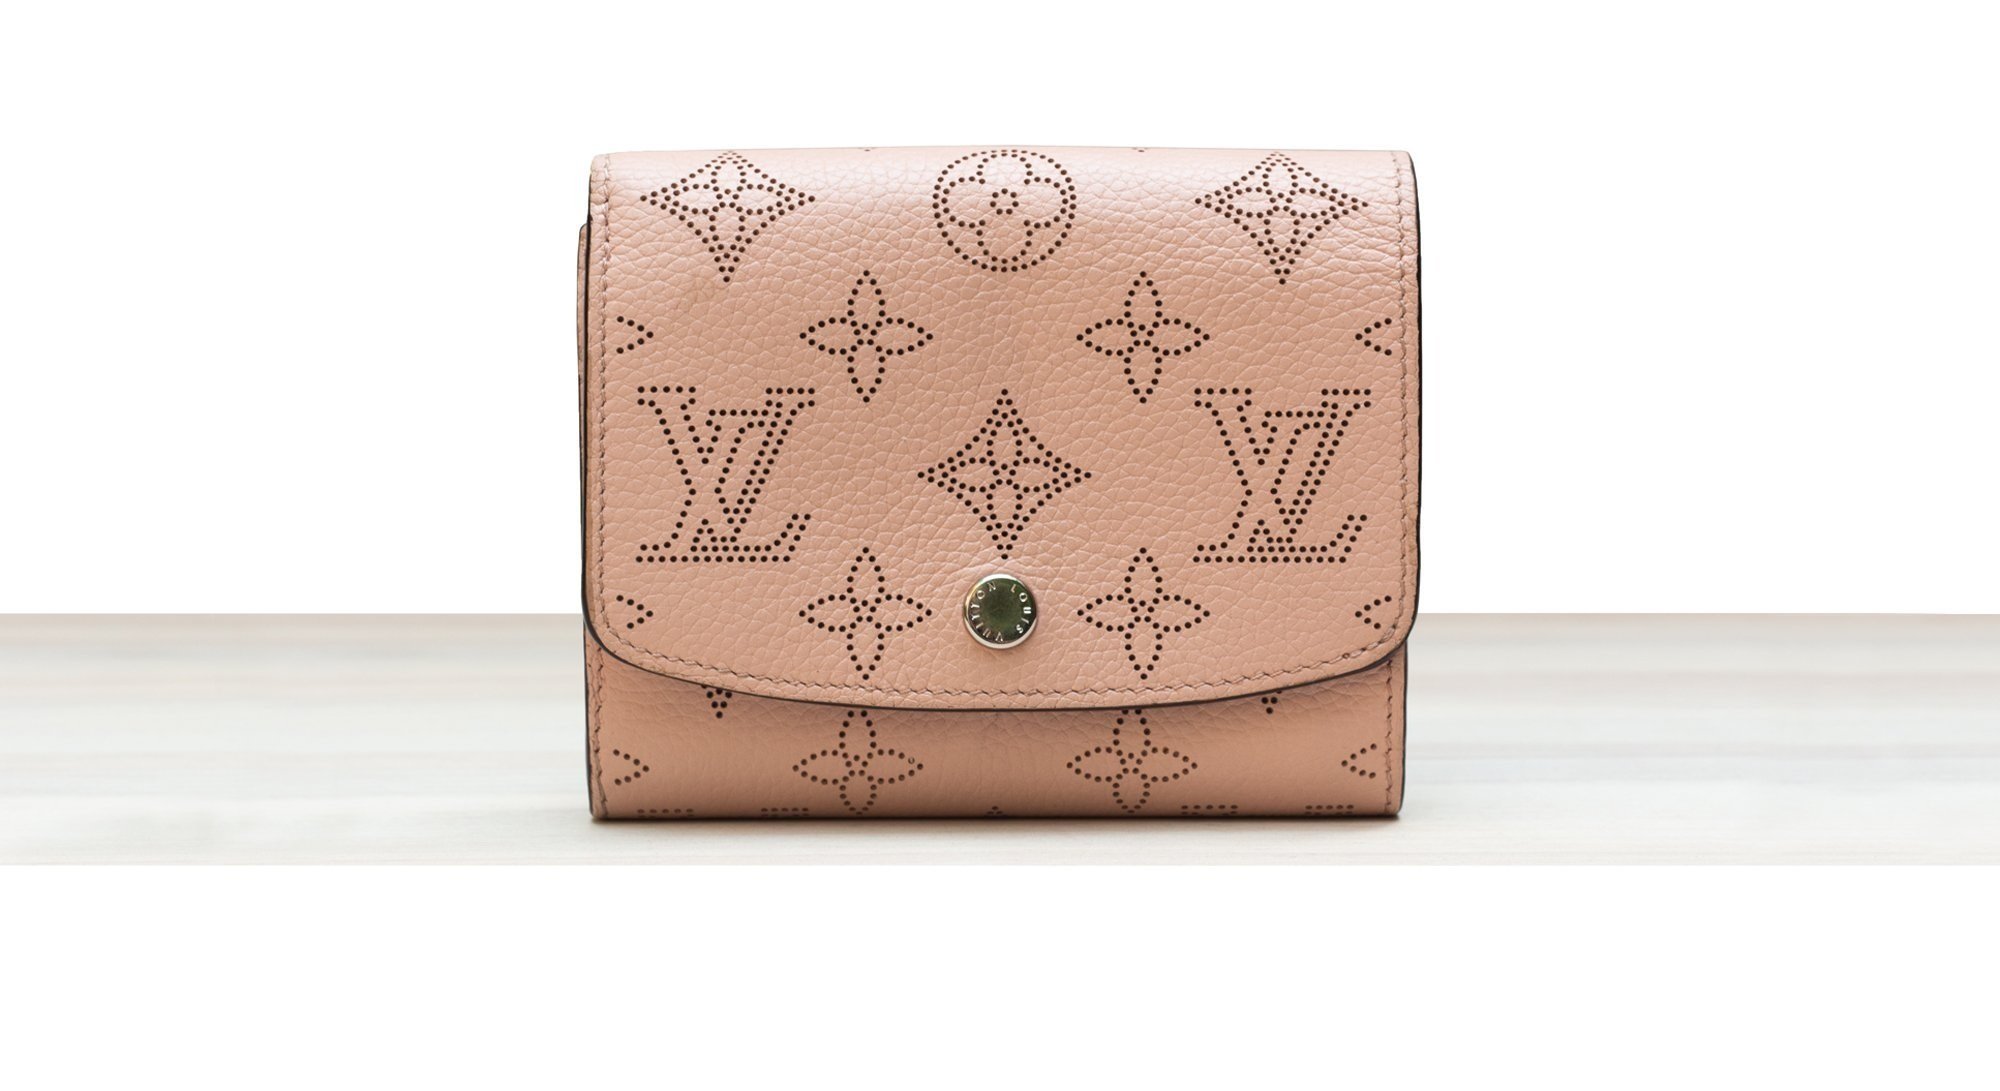 Louis Vuitton Handbag Spa - Stain Removal & Restoration